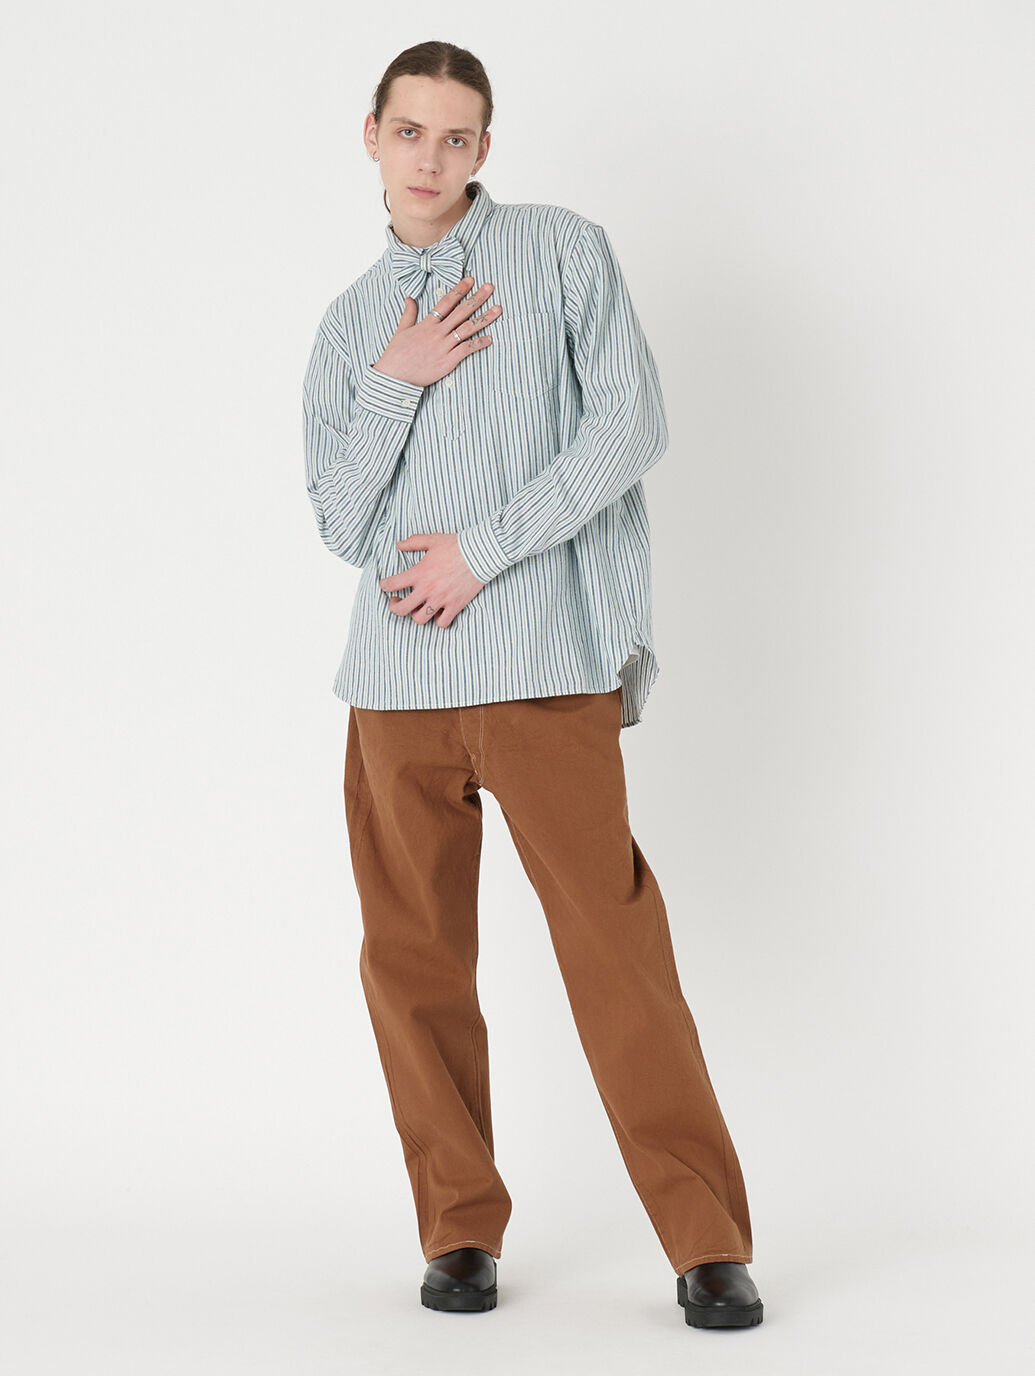 LEVI'S® VINTAGE CLOTHING ポップオーバー サンセットシャツ CLASSIC ブルー ECRU